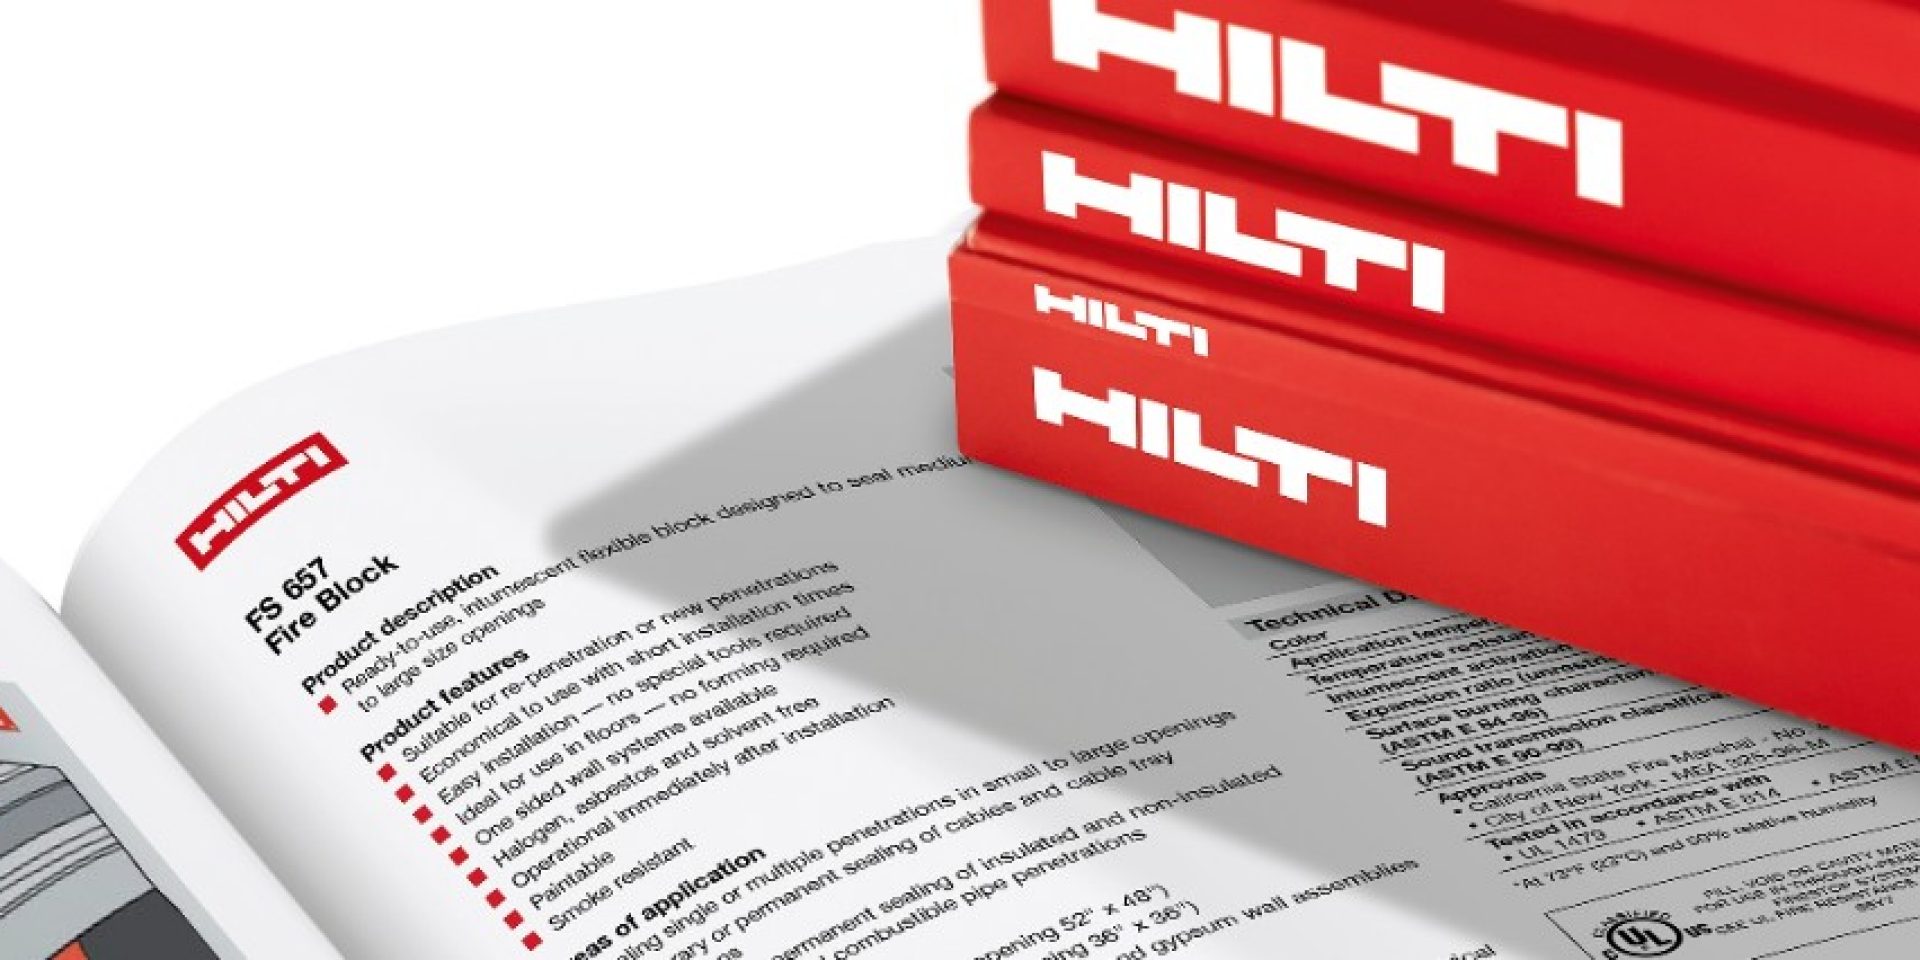 Hilti firestop technical literature